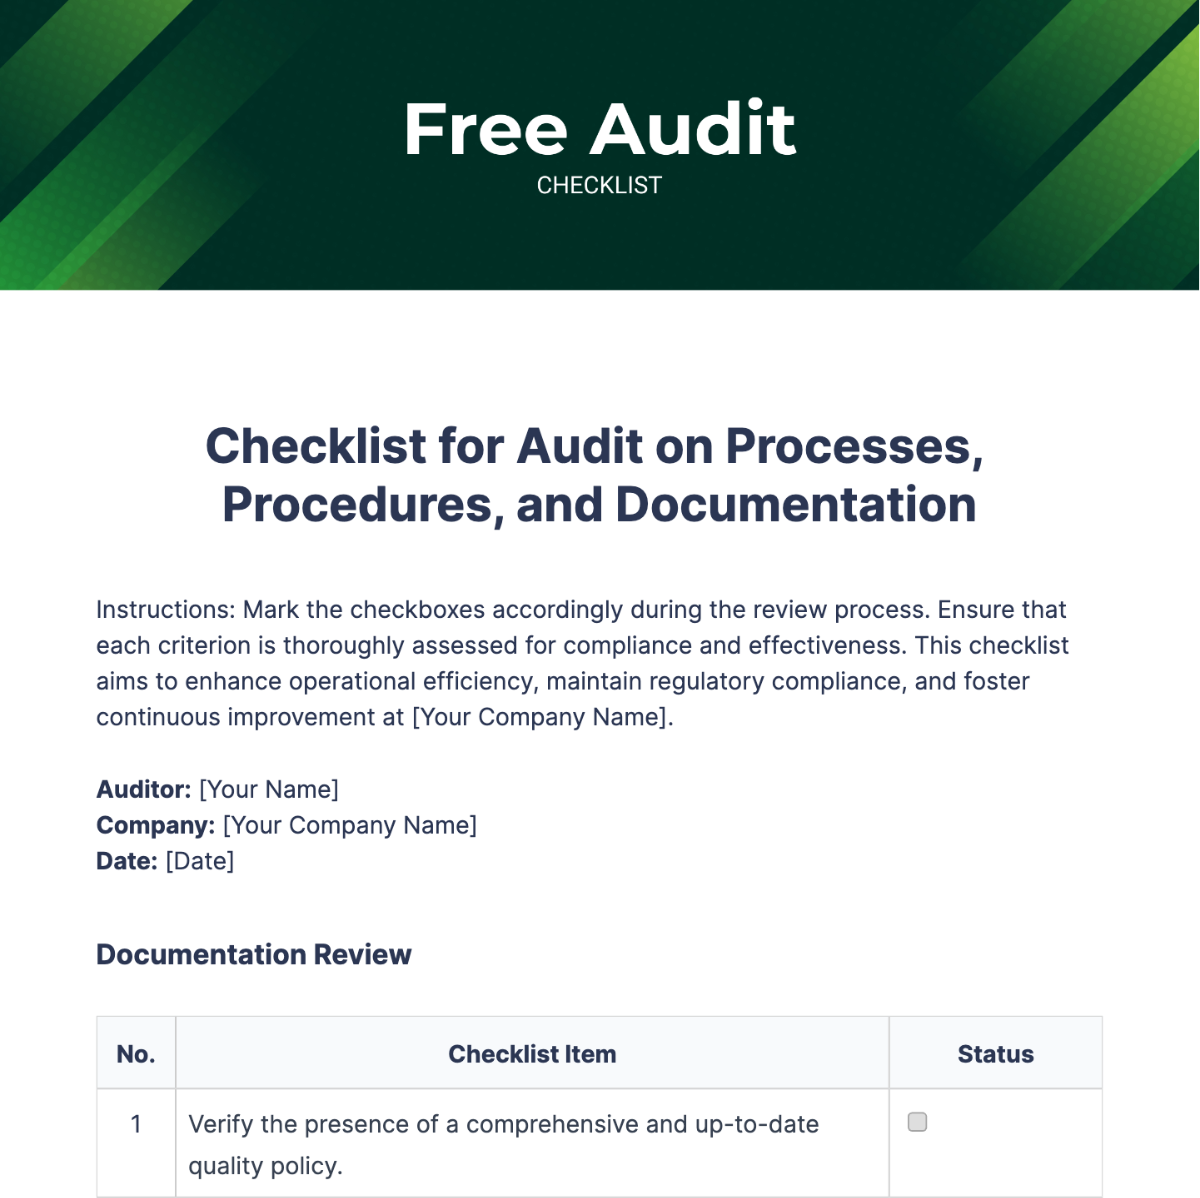 Free Audit Checklist Template